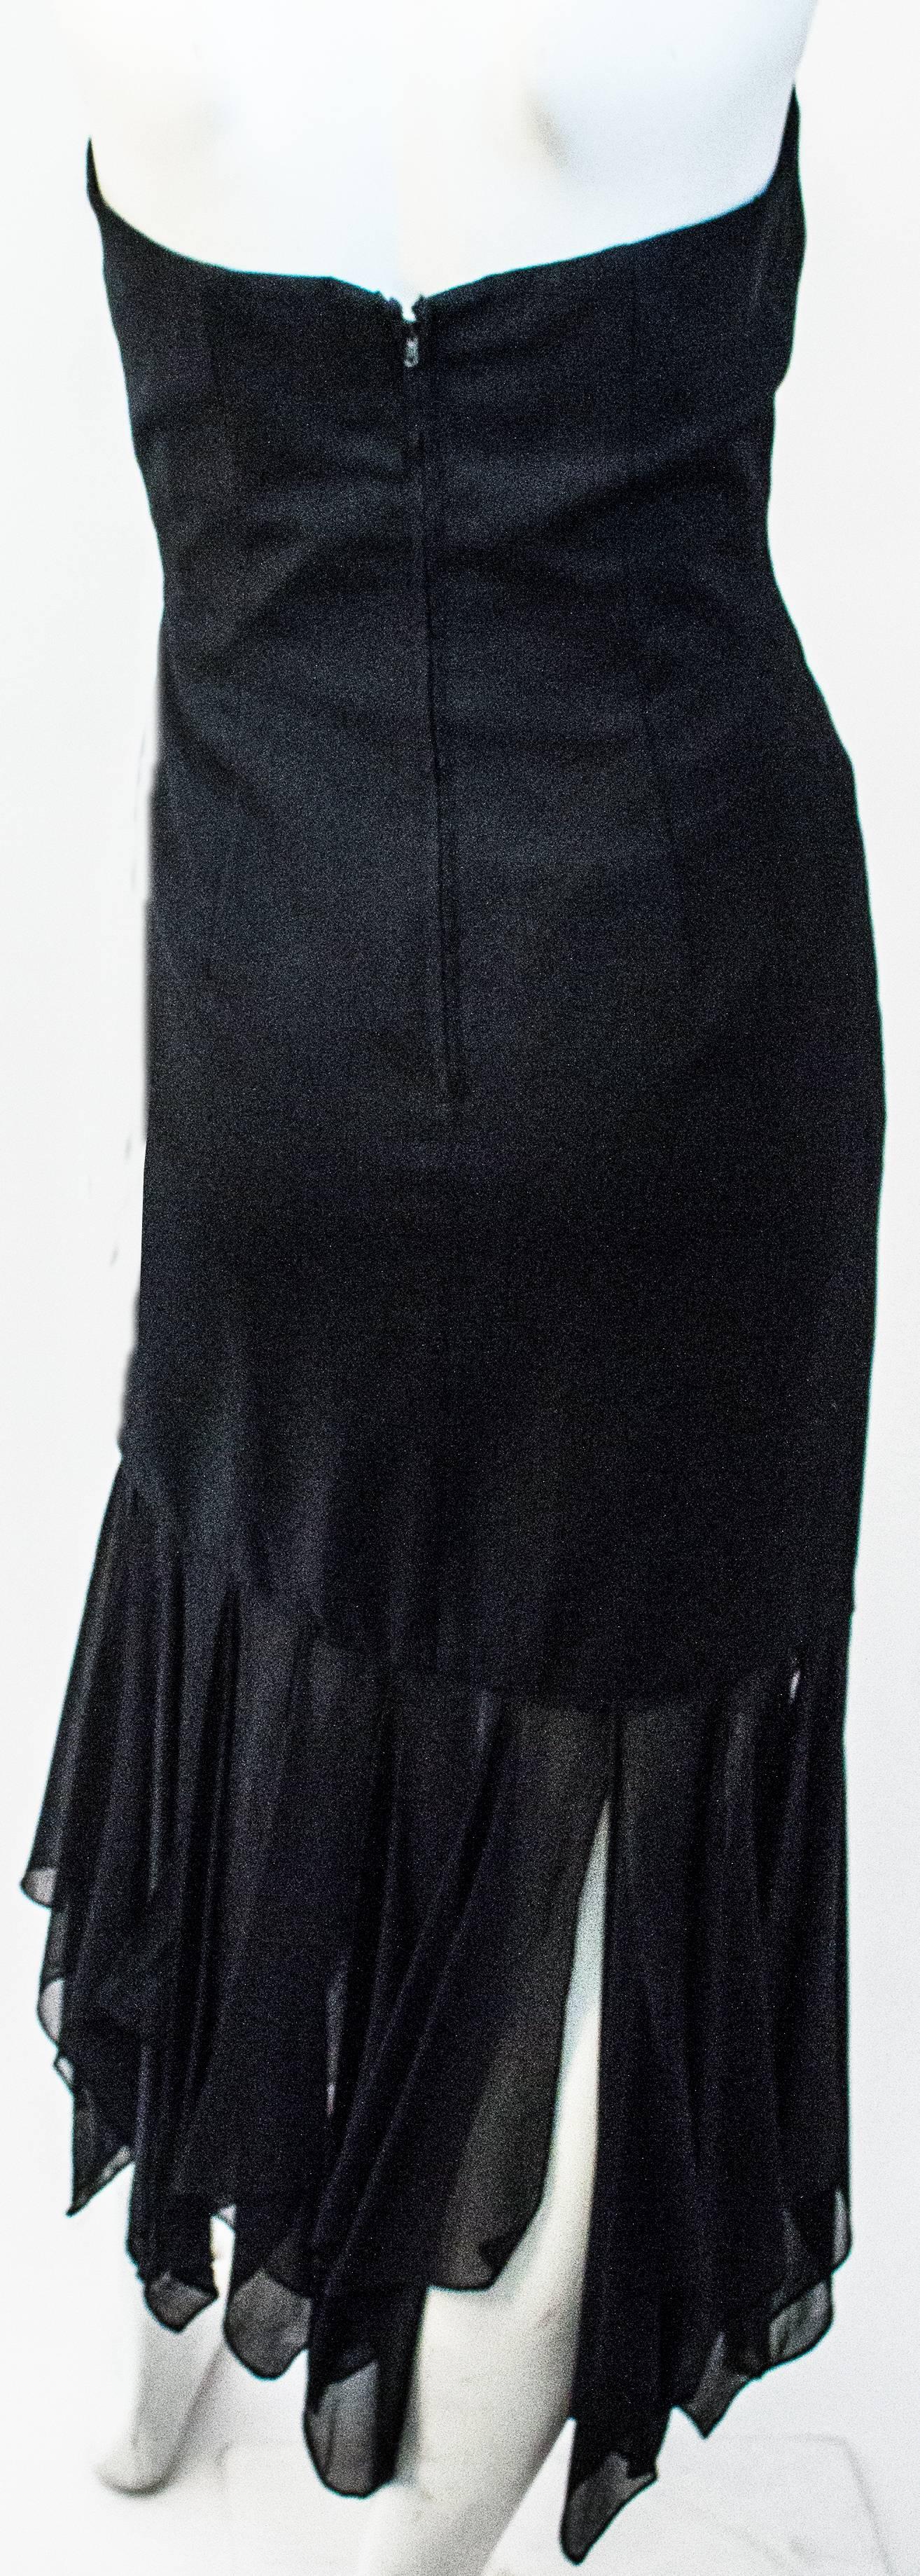 80s I Magnin Black Strapless Dress with Handkerchief Chiffon Hem.